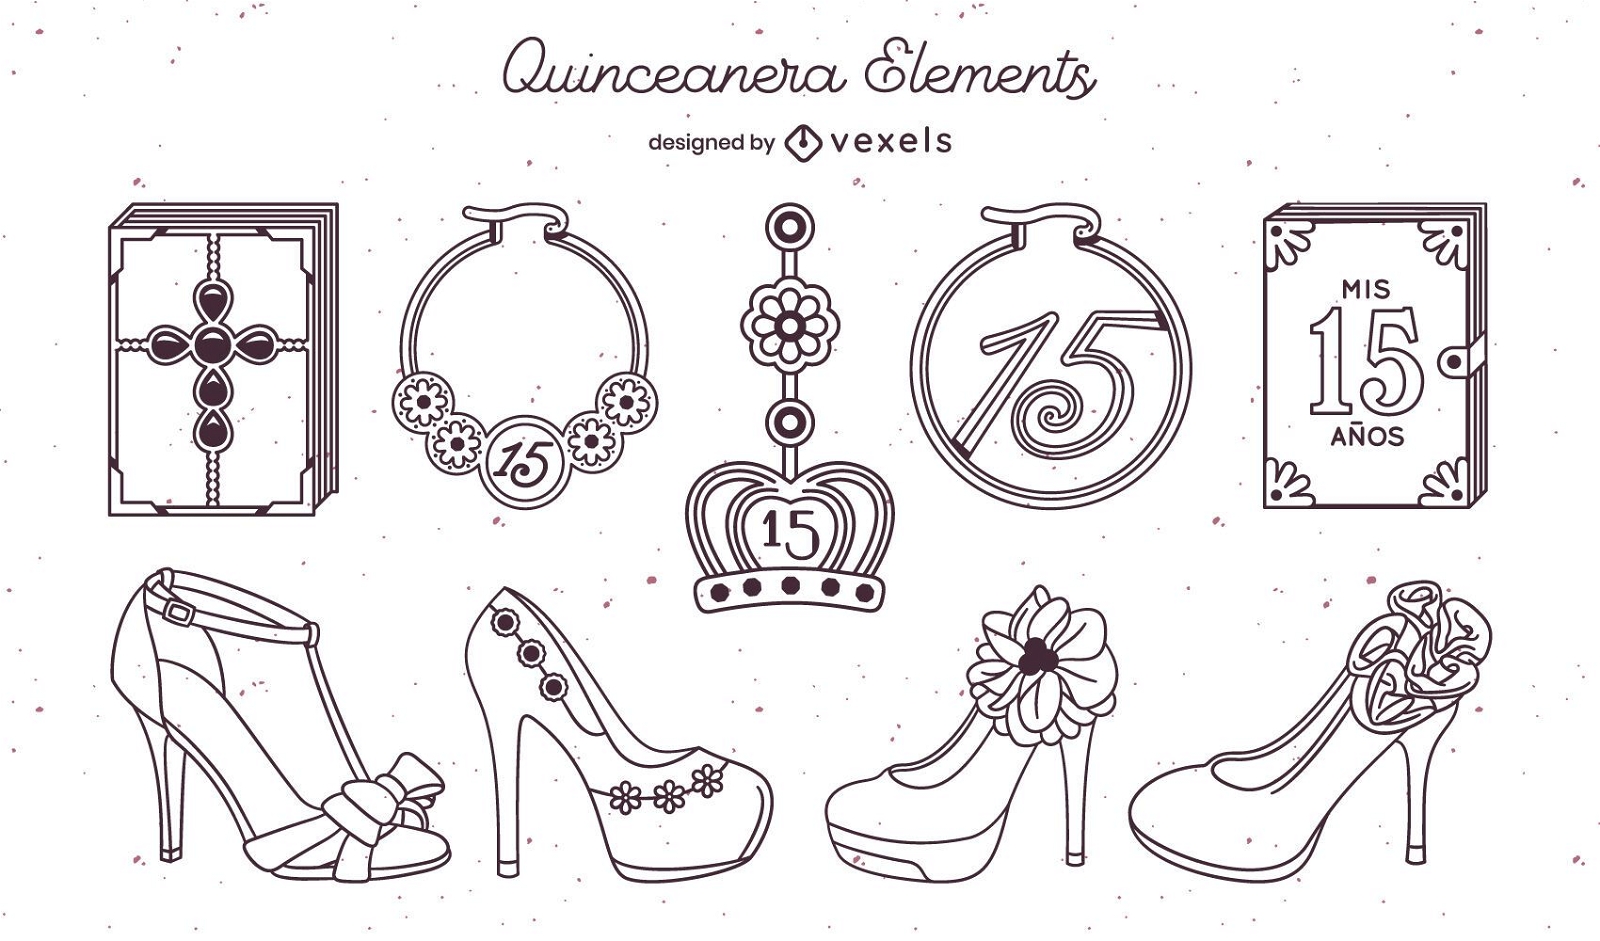 Quinceanera elements stroke set